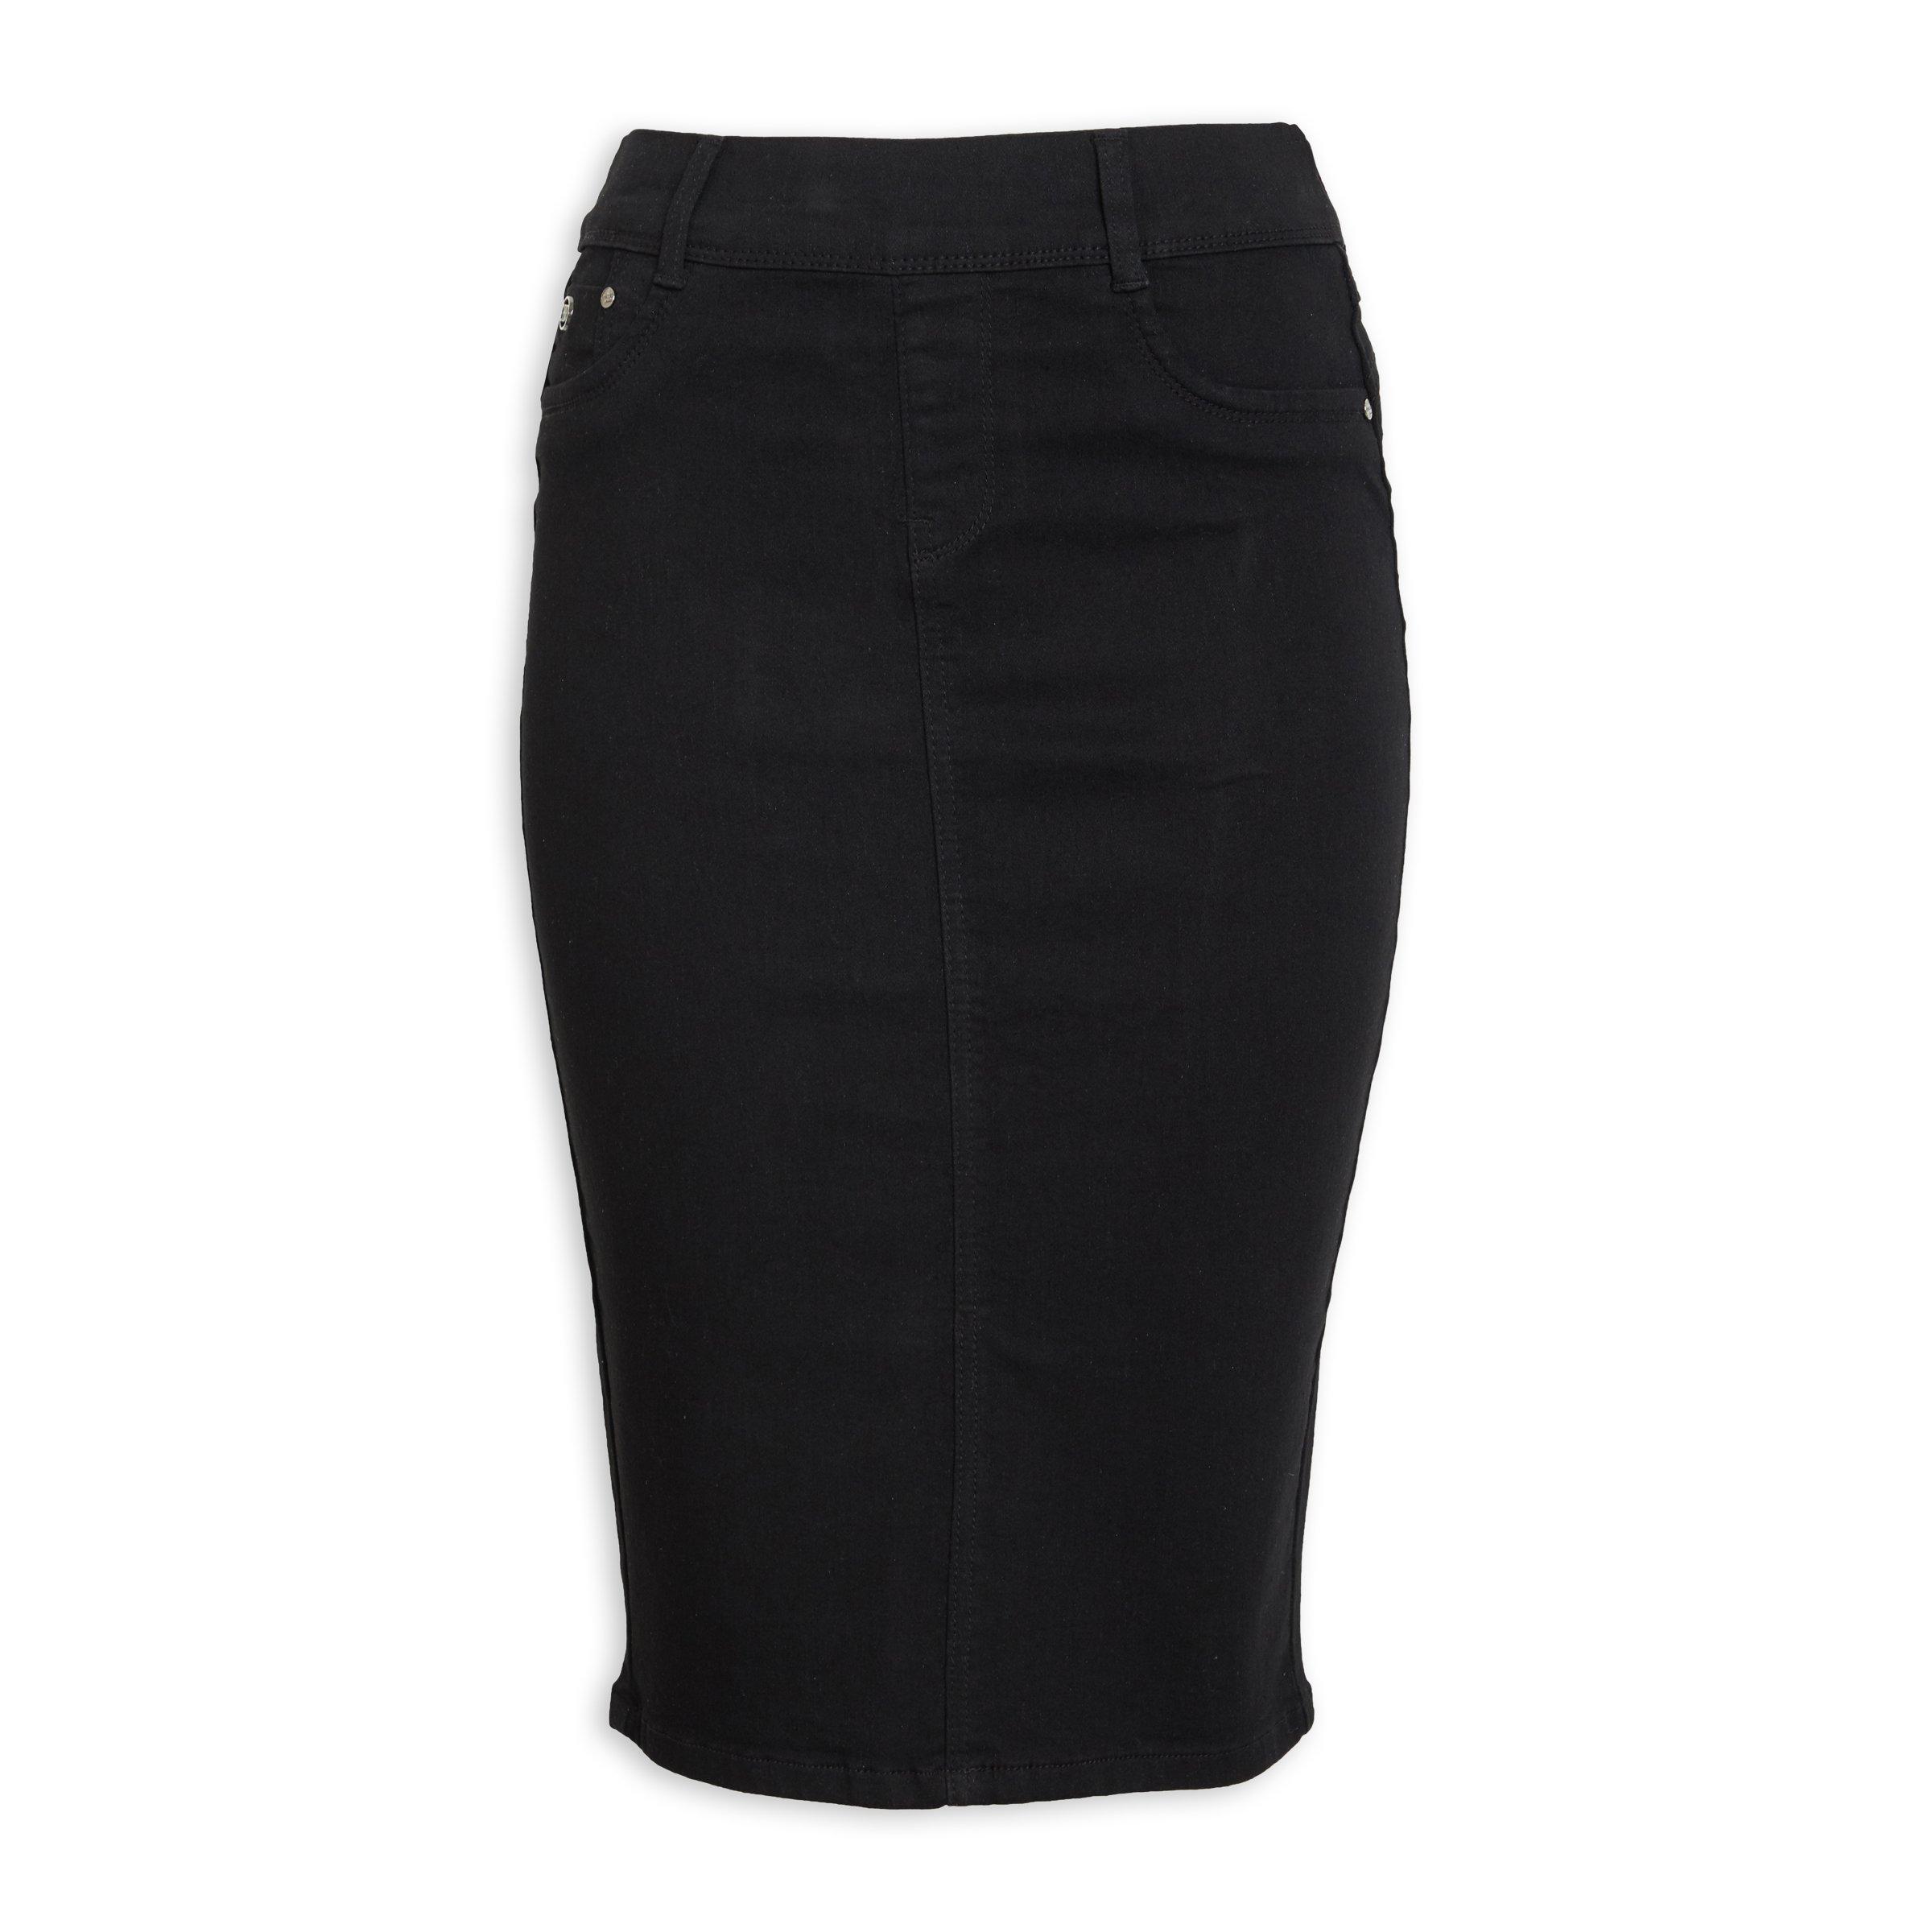 Buy OBR Black Bodycon Skirt Online | Truworths